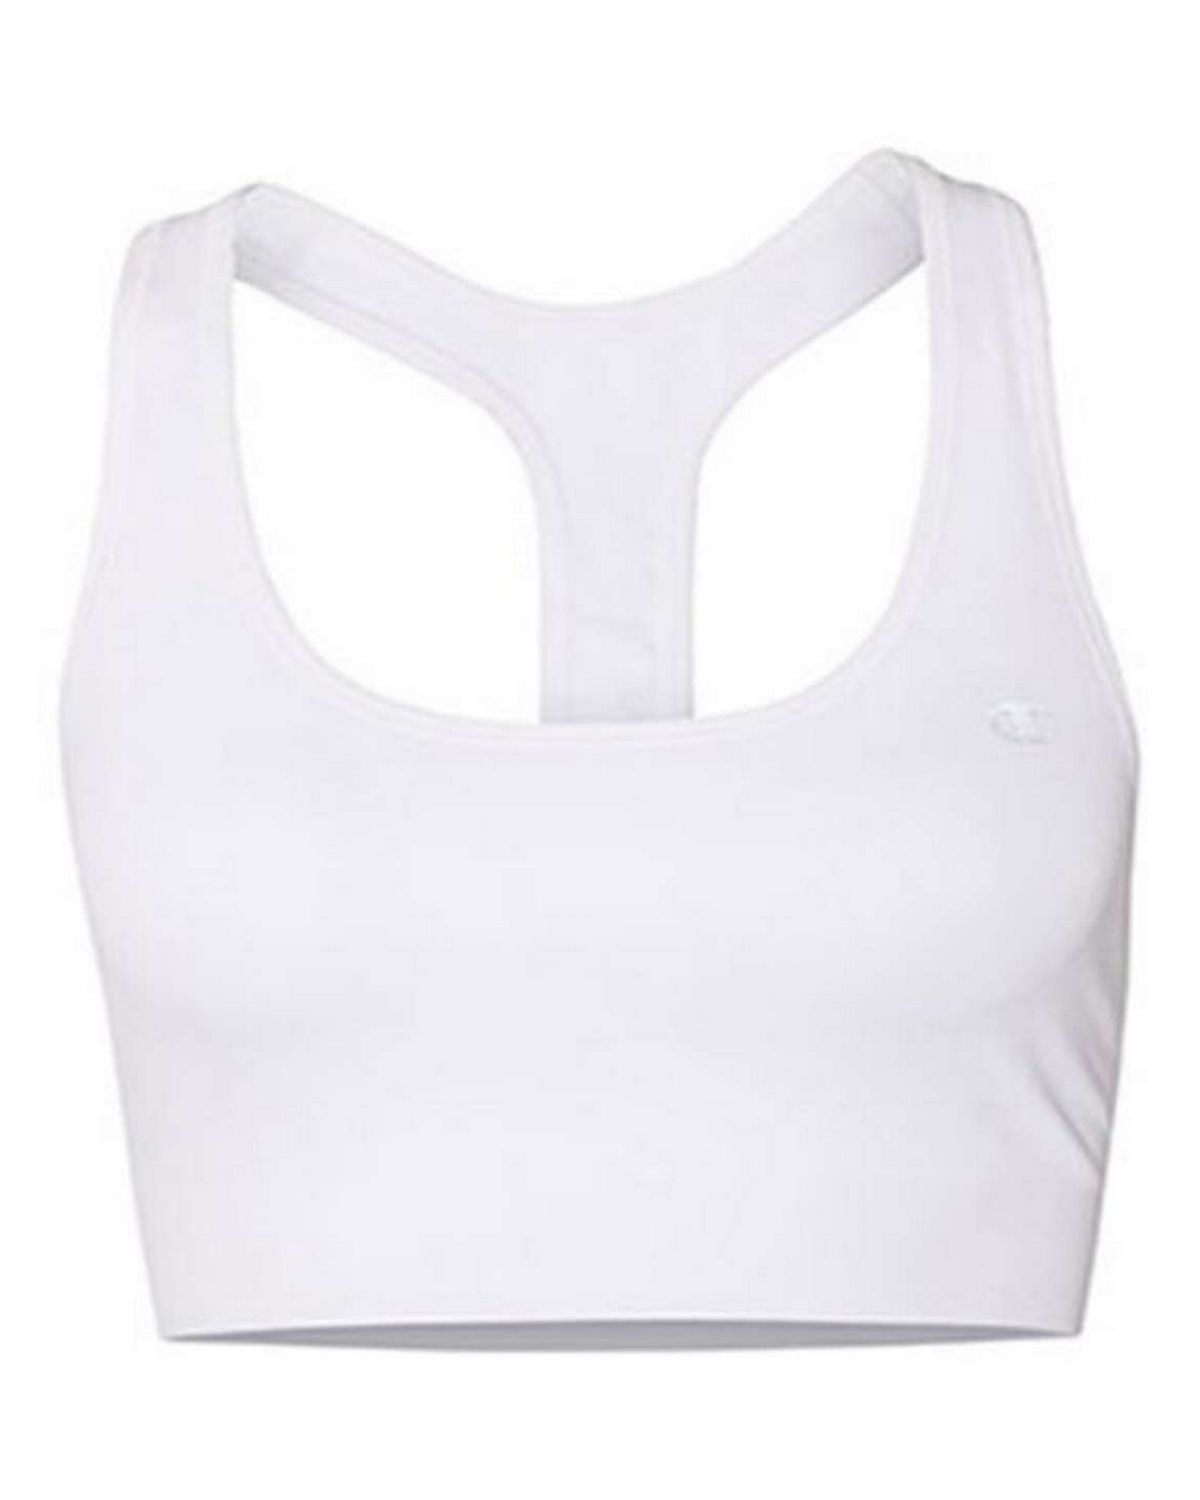 Hanes HU01 ComfortBlend T-Shirt Front-Close Underwire Bra